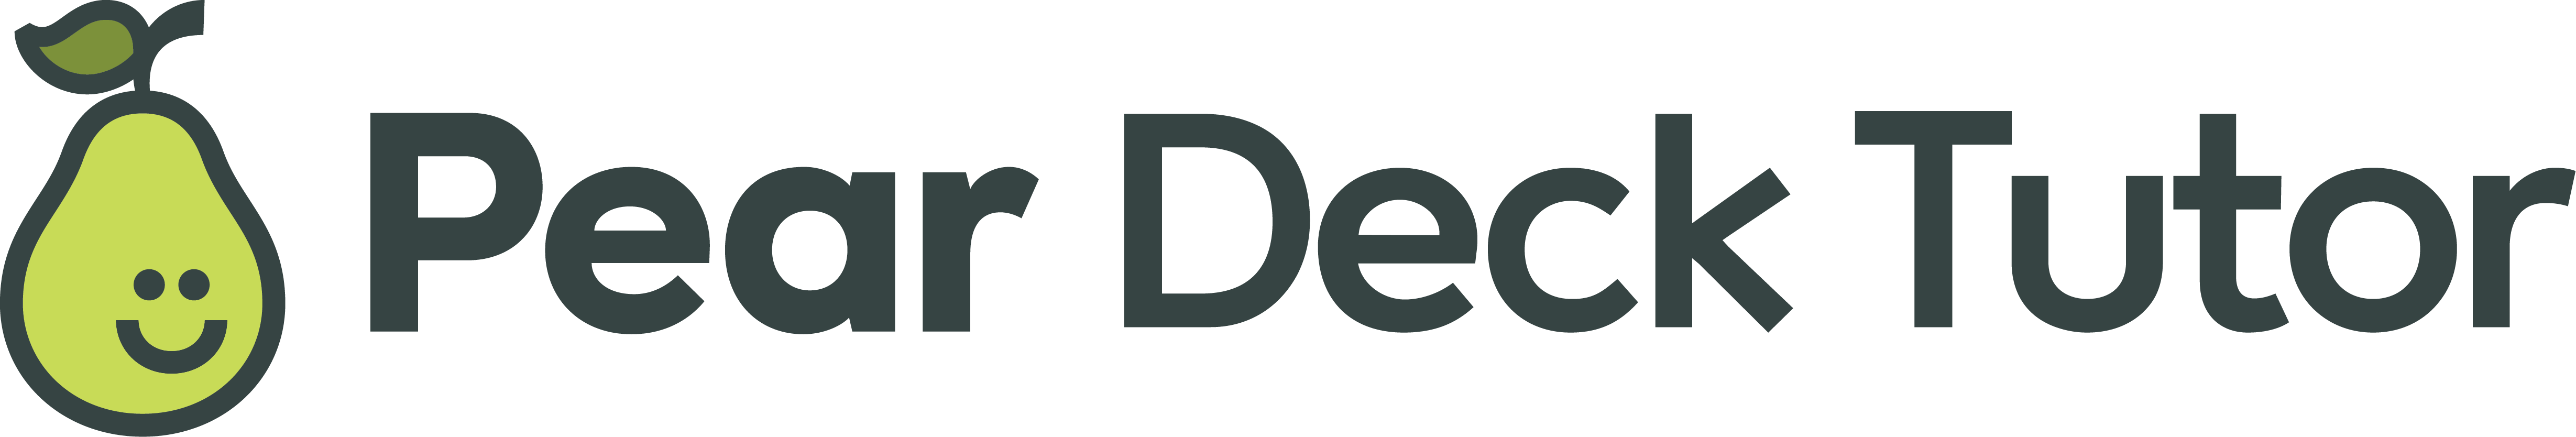 Pear Deck Tutor Logo MultiColor - .png (Formerly TutorMe)